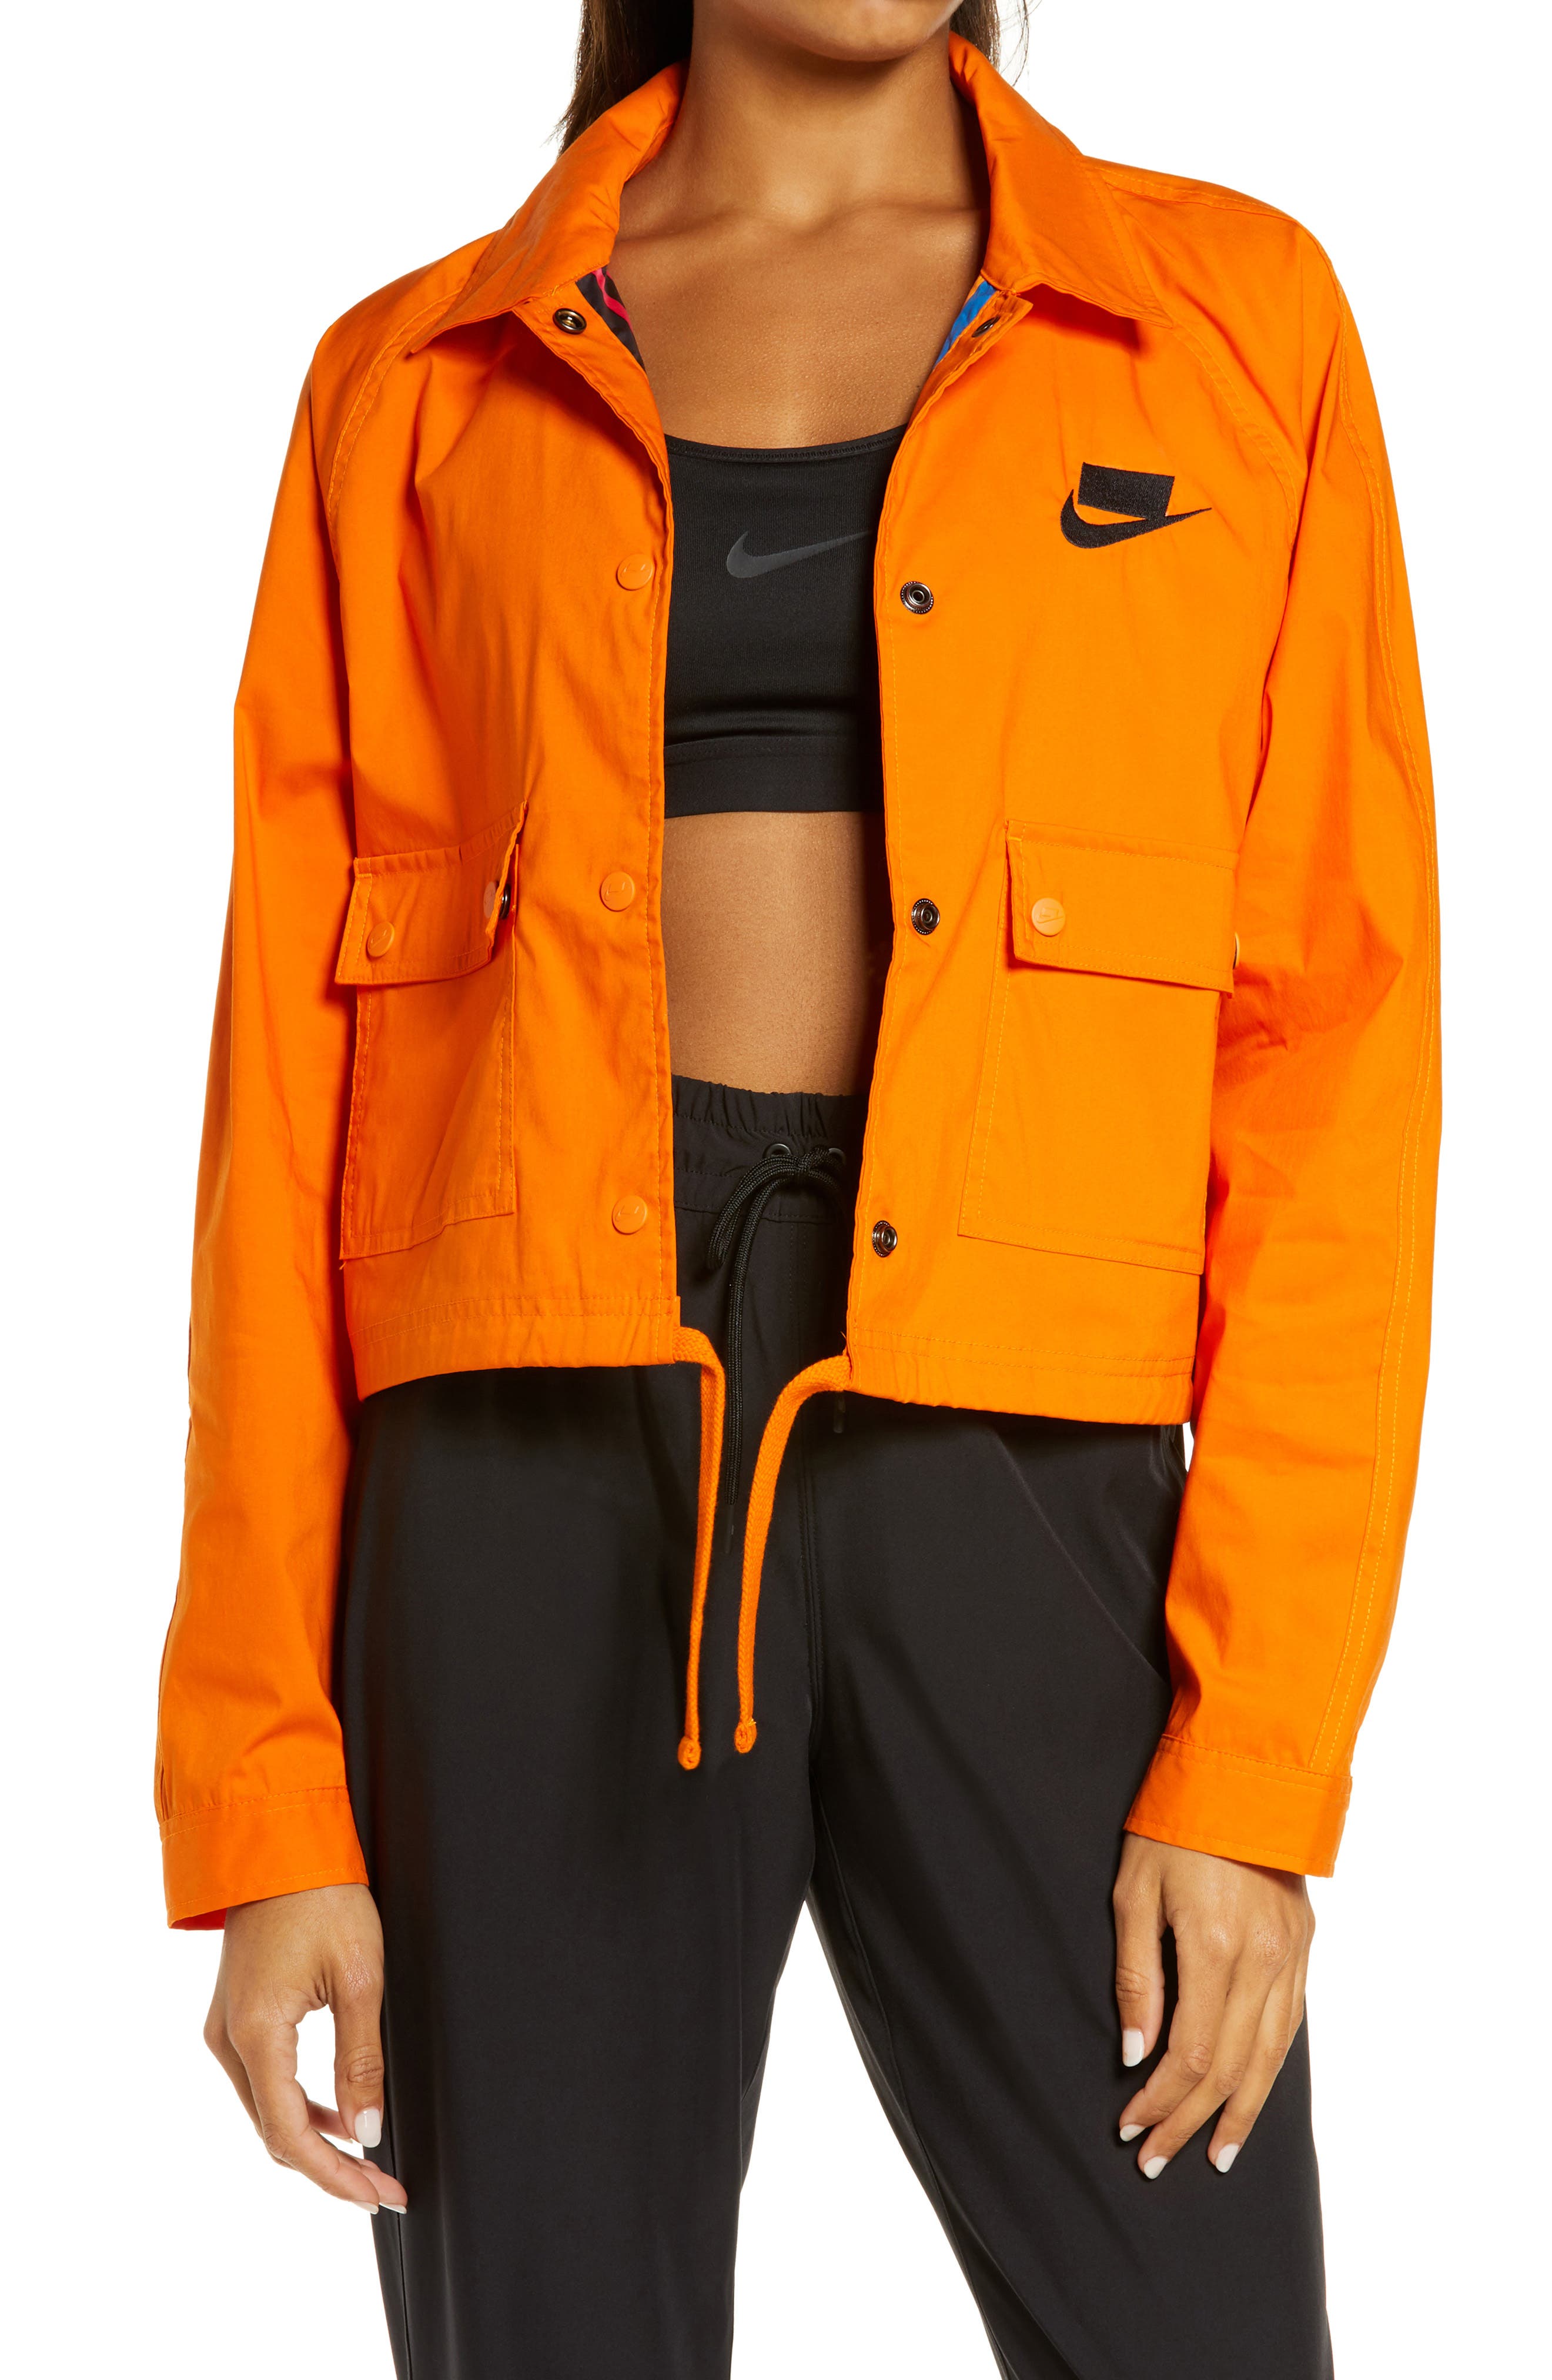 nike orange jacket women's